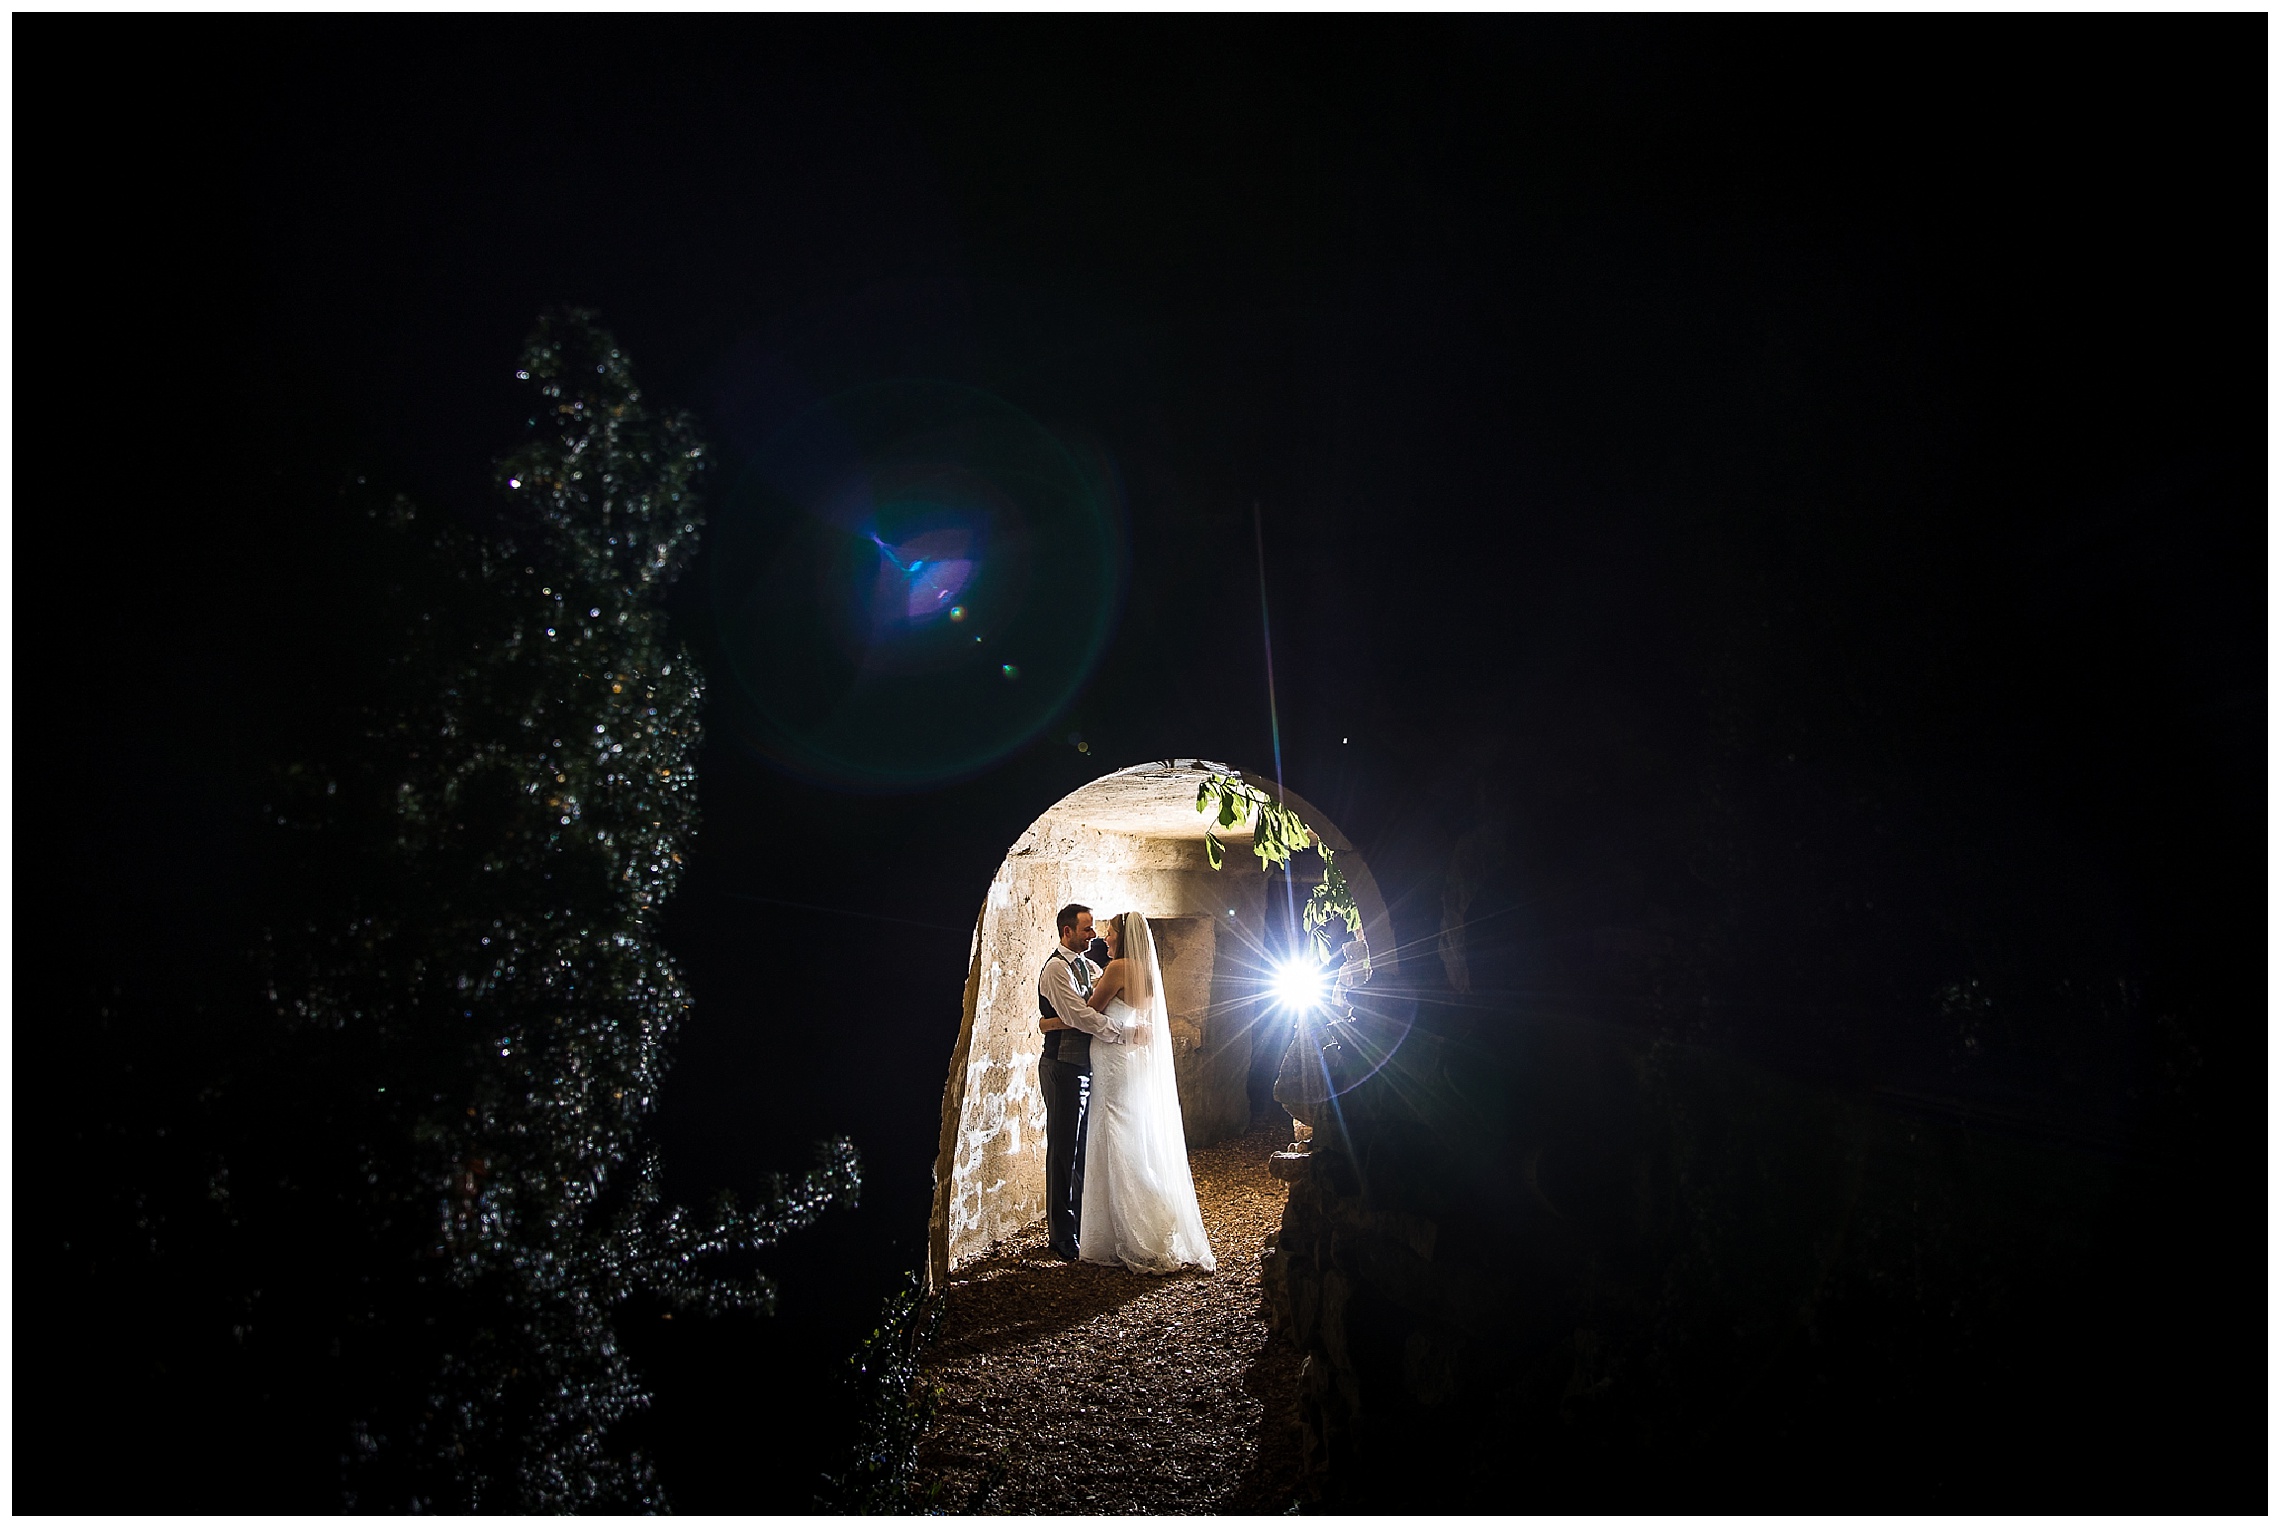 Bride and groom stood next to waterfall in dark, illuminated by spotlight